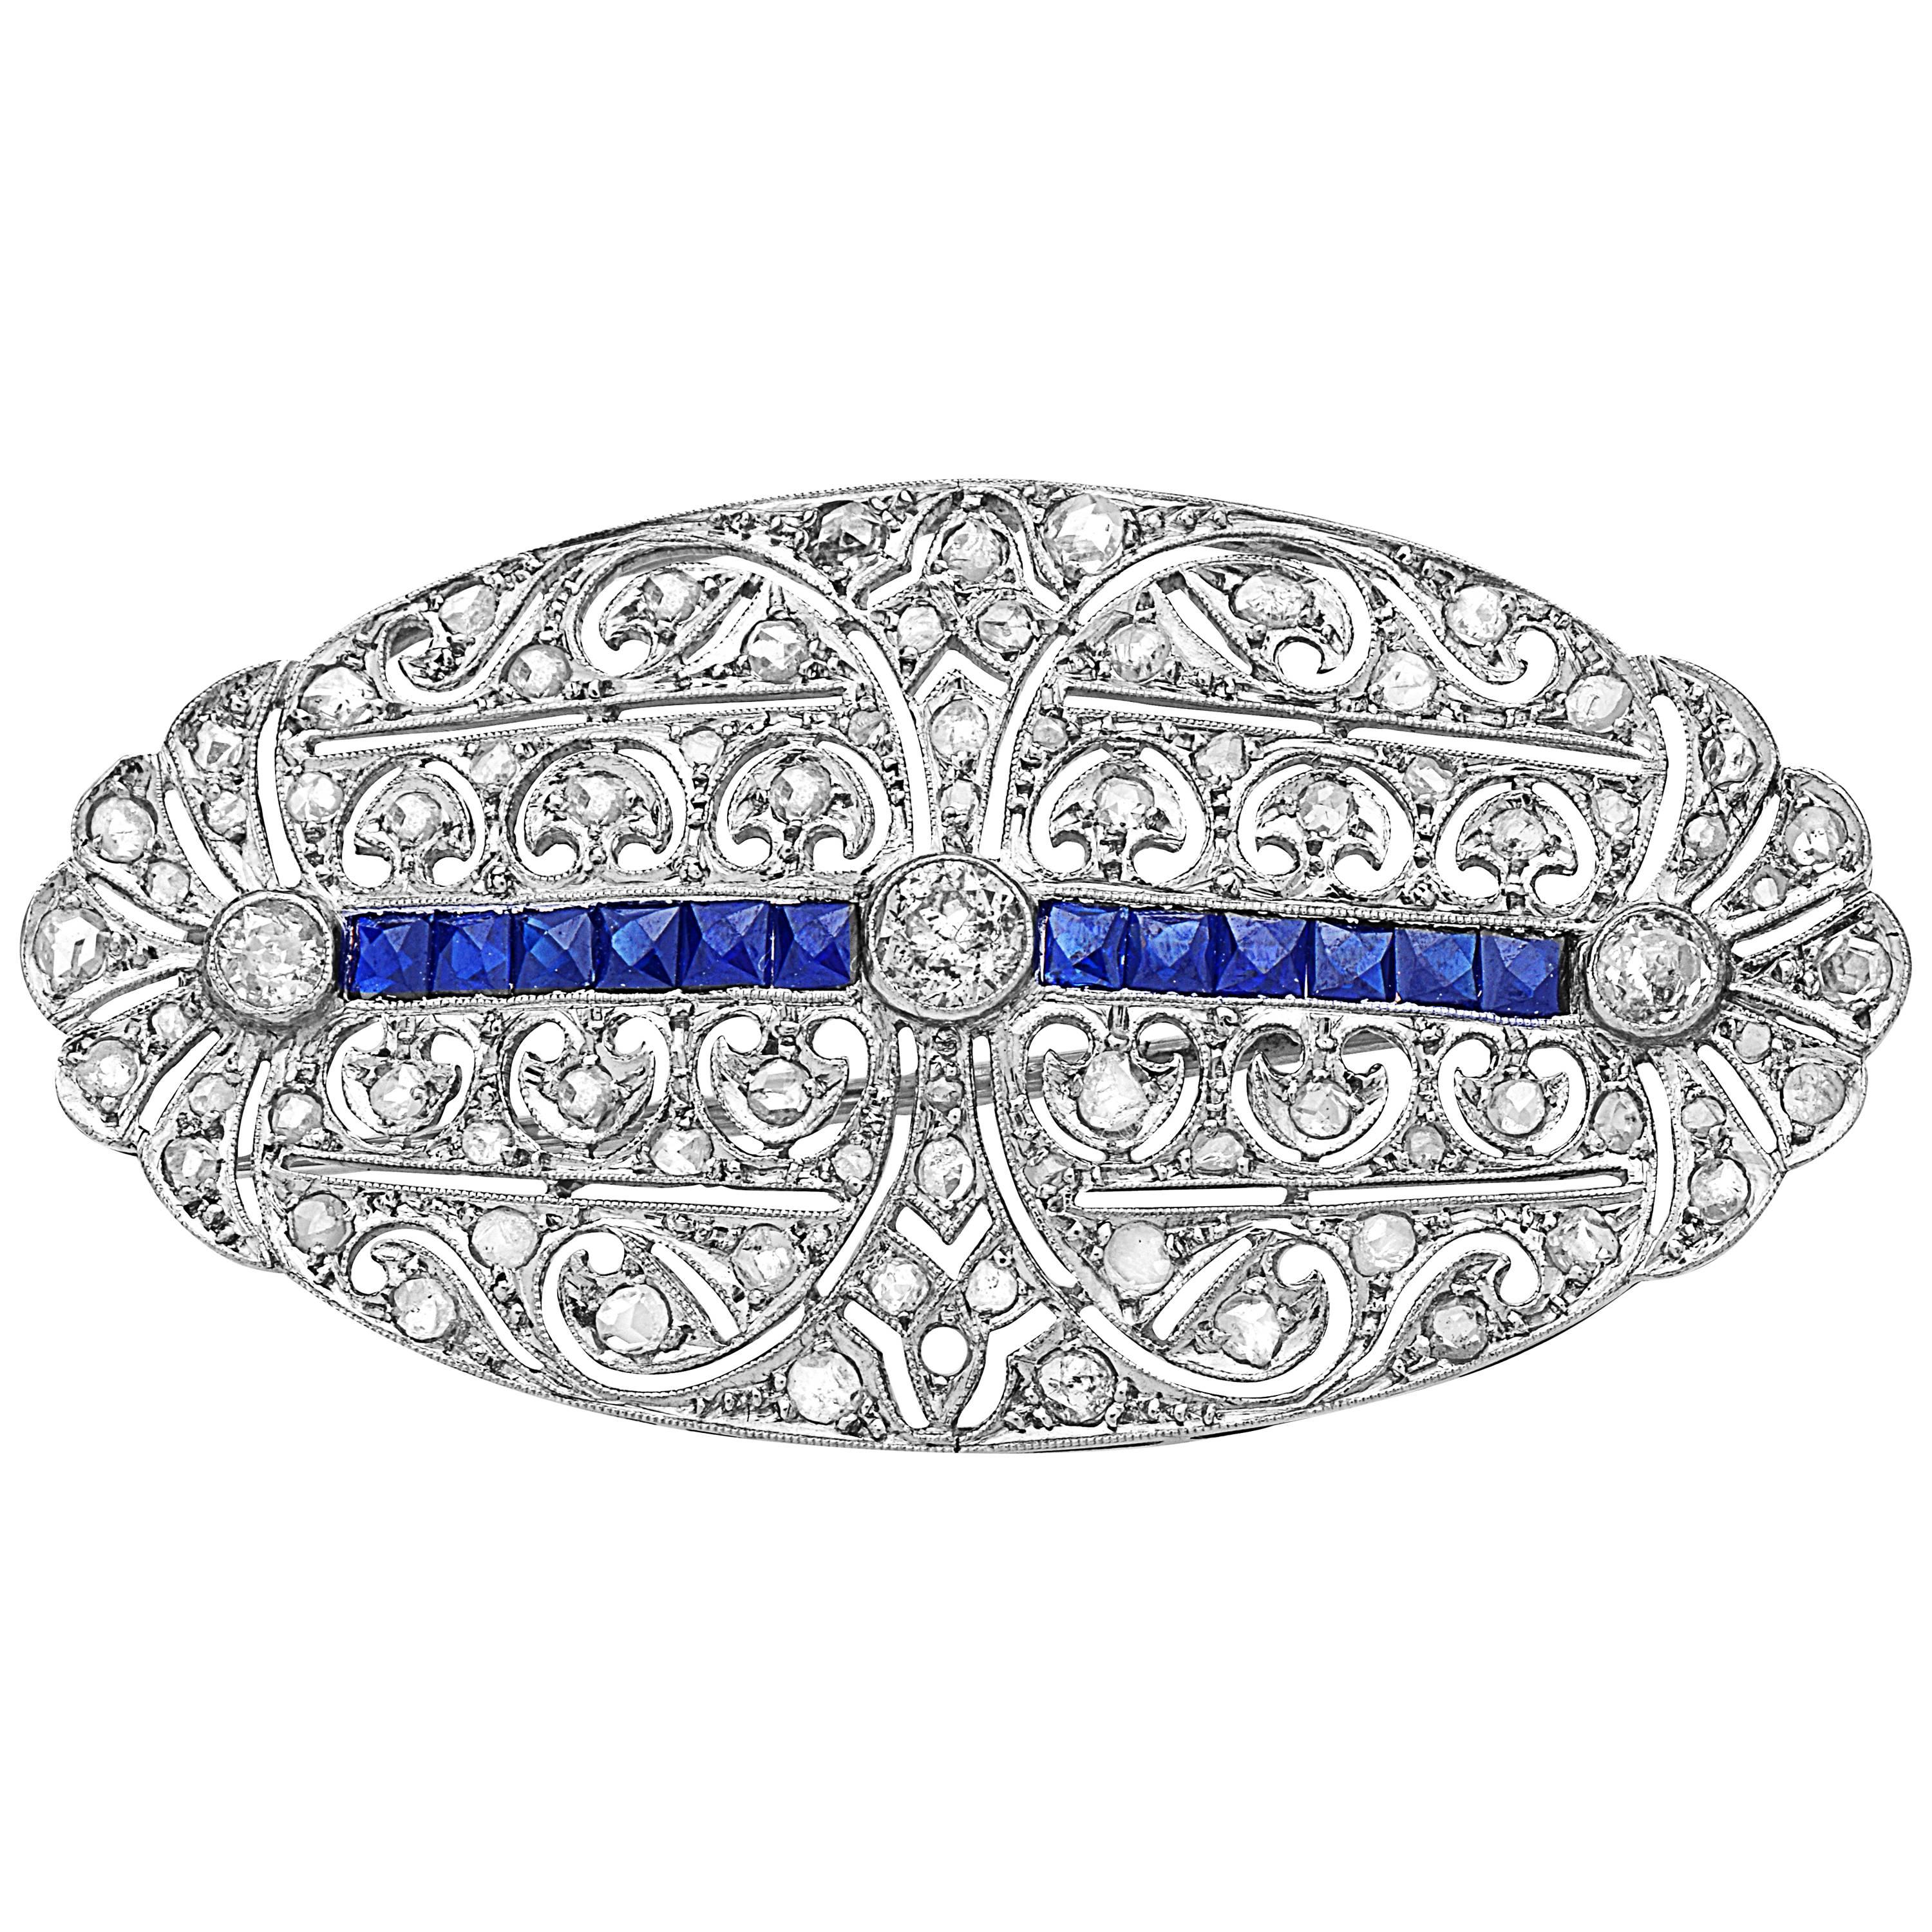 Emilio Jewelry Art Deco Style Diamond Brooch